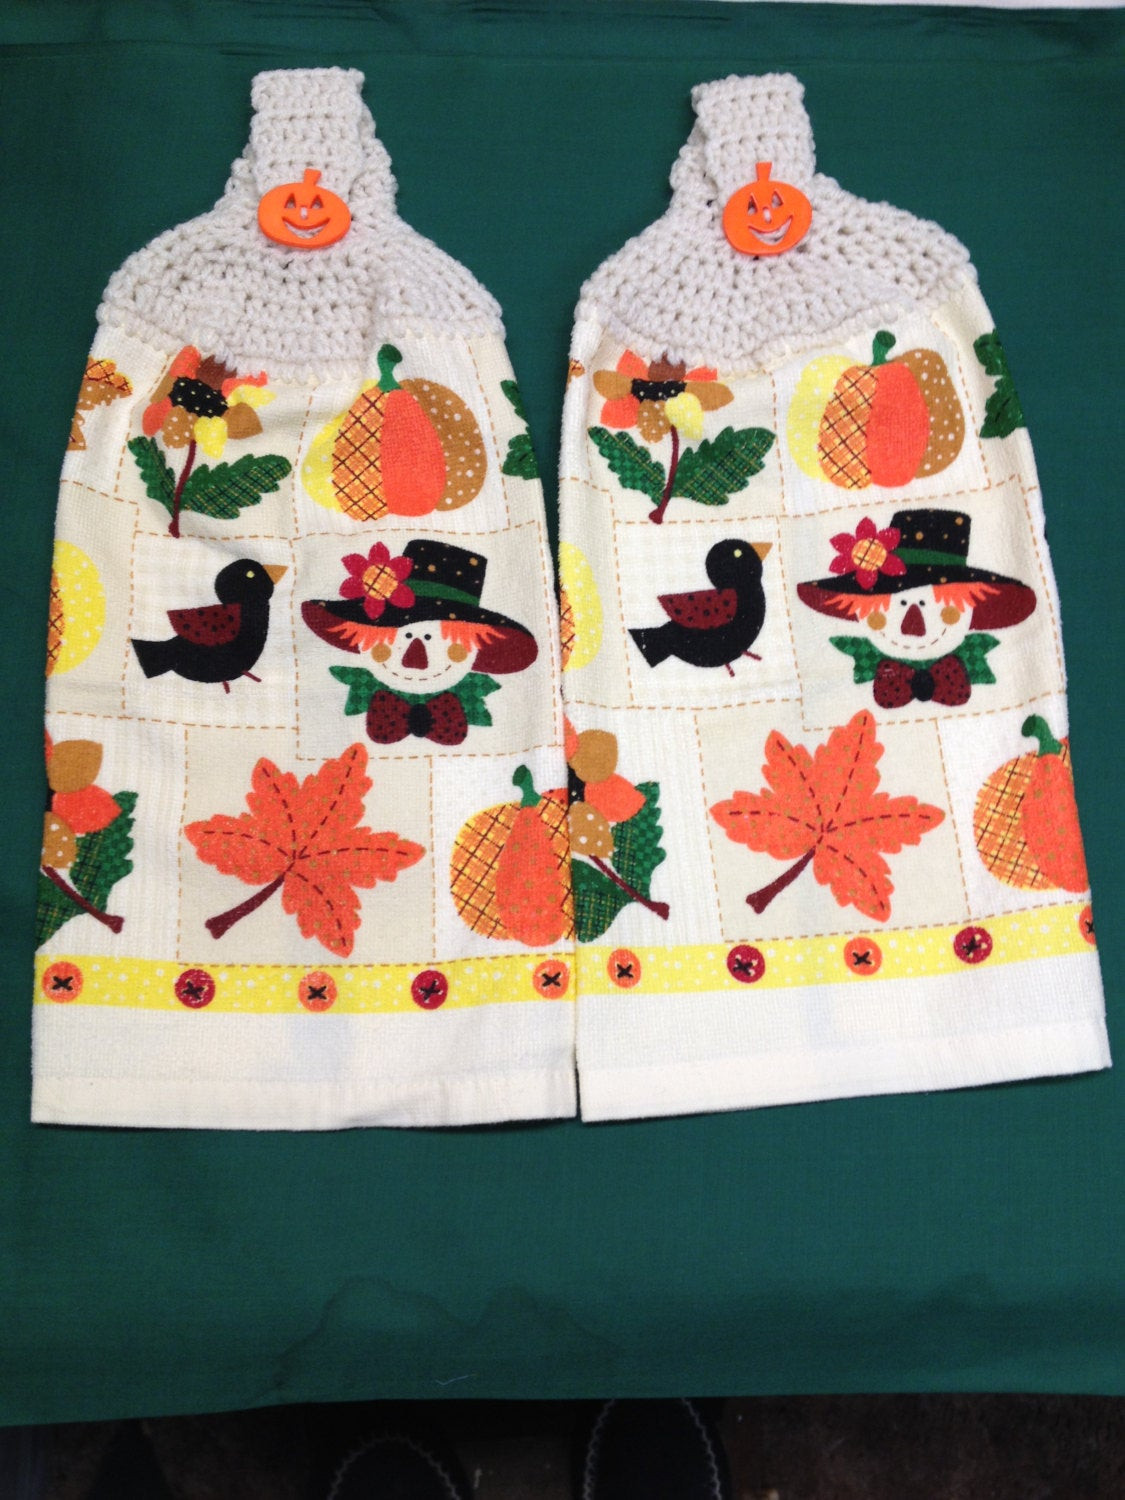 Halloween Kitchen Towels
 HALLOWEEN Hand or Kitchen Towel set of 2 by craftysandy on